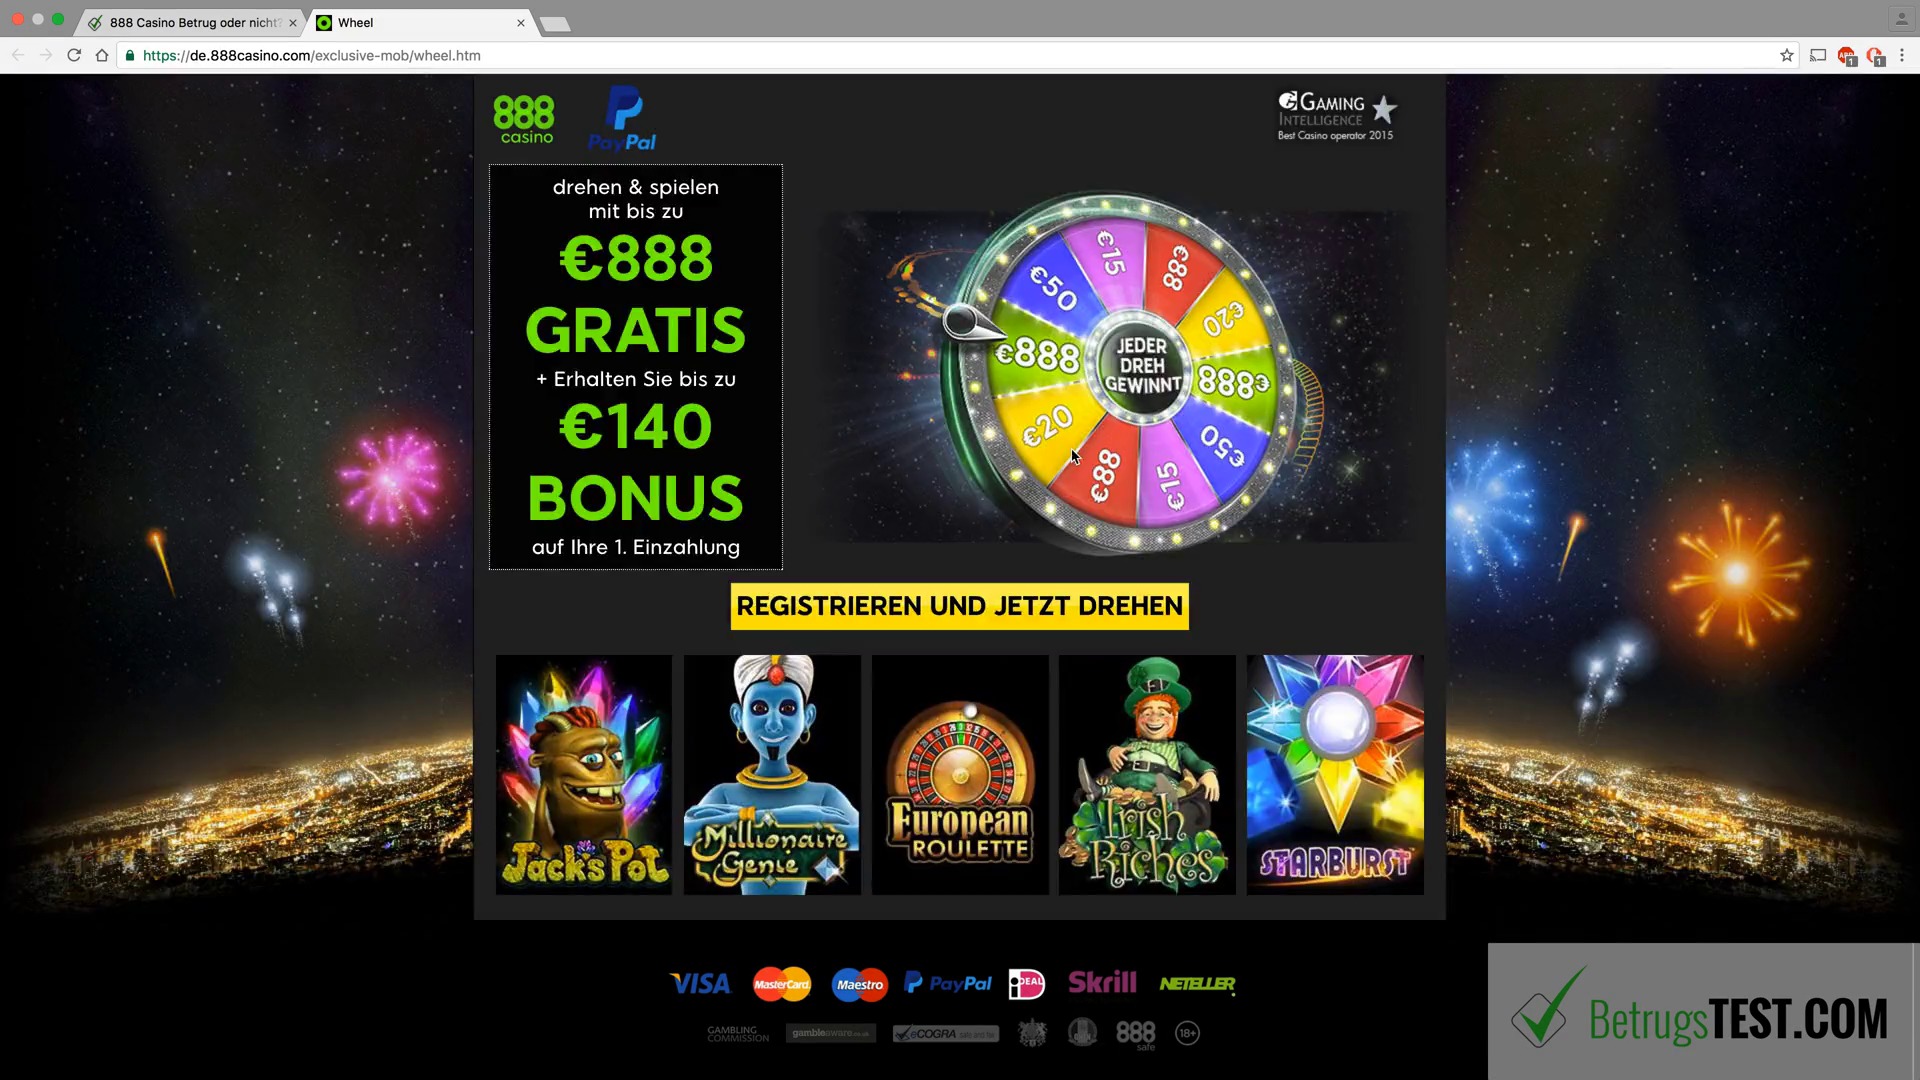 demo mode 888 online casino